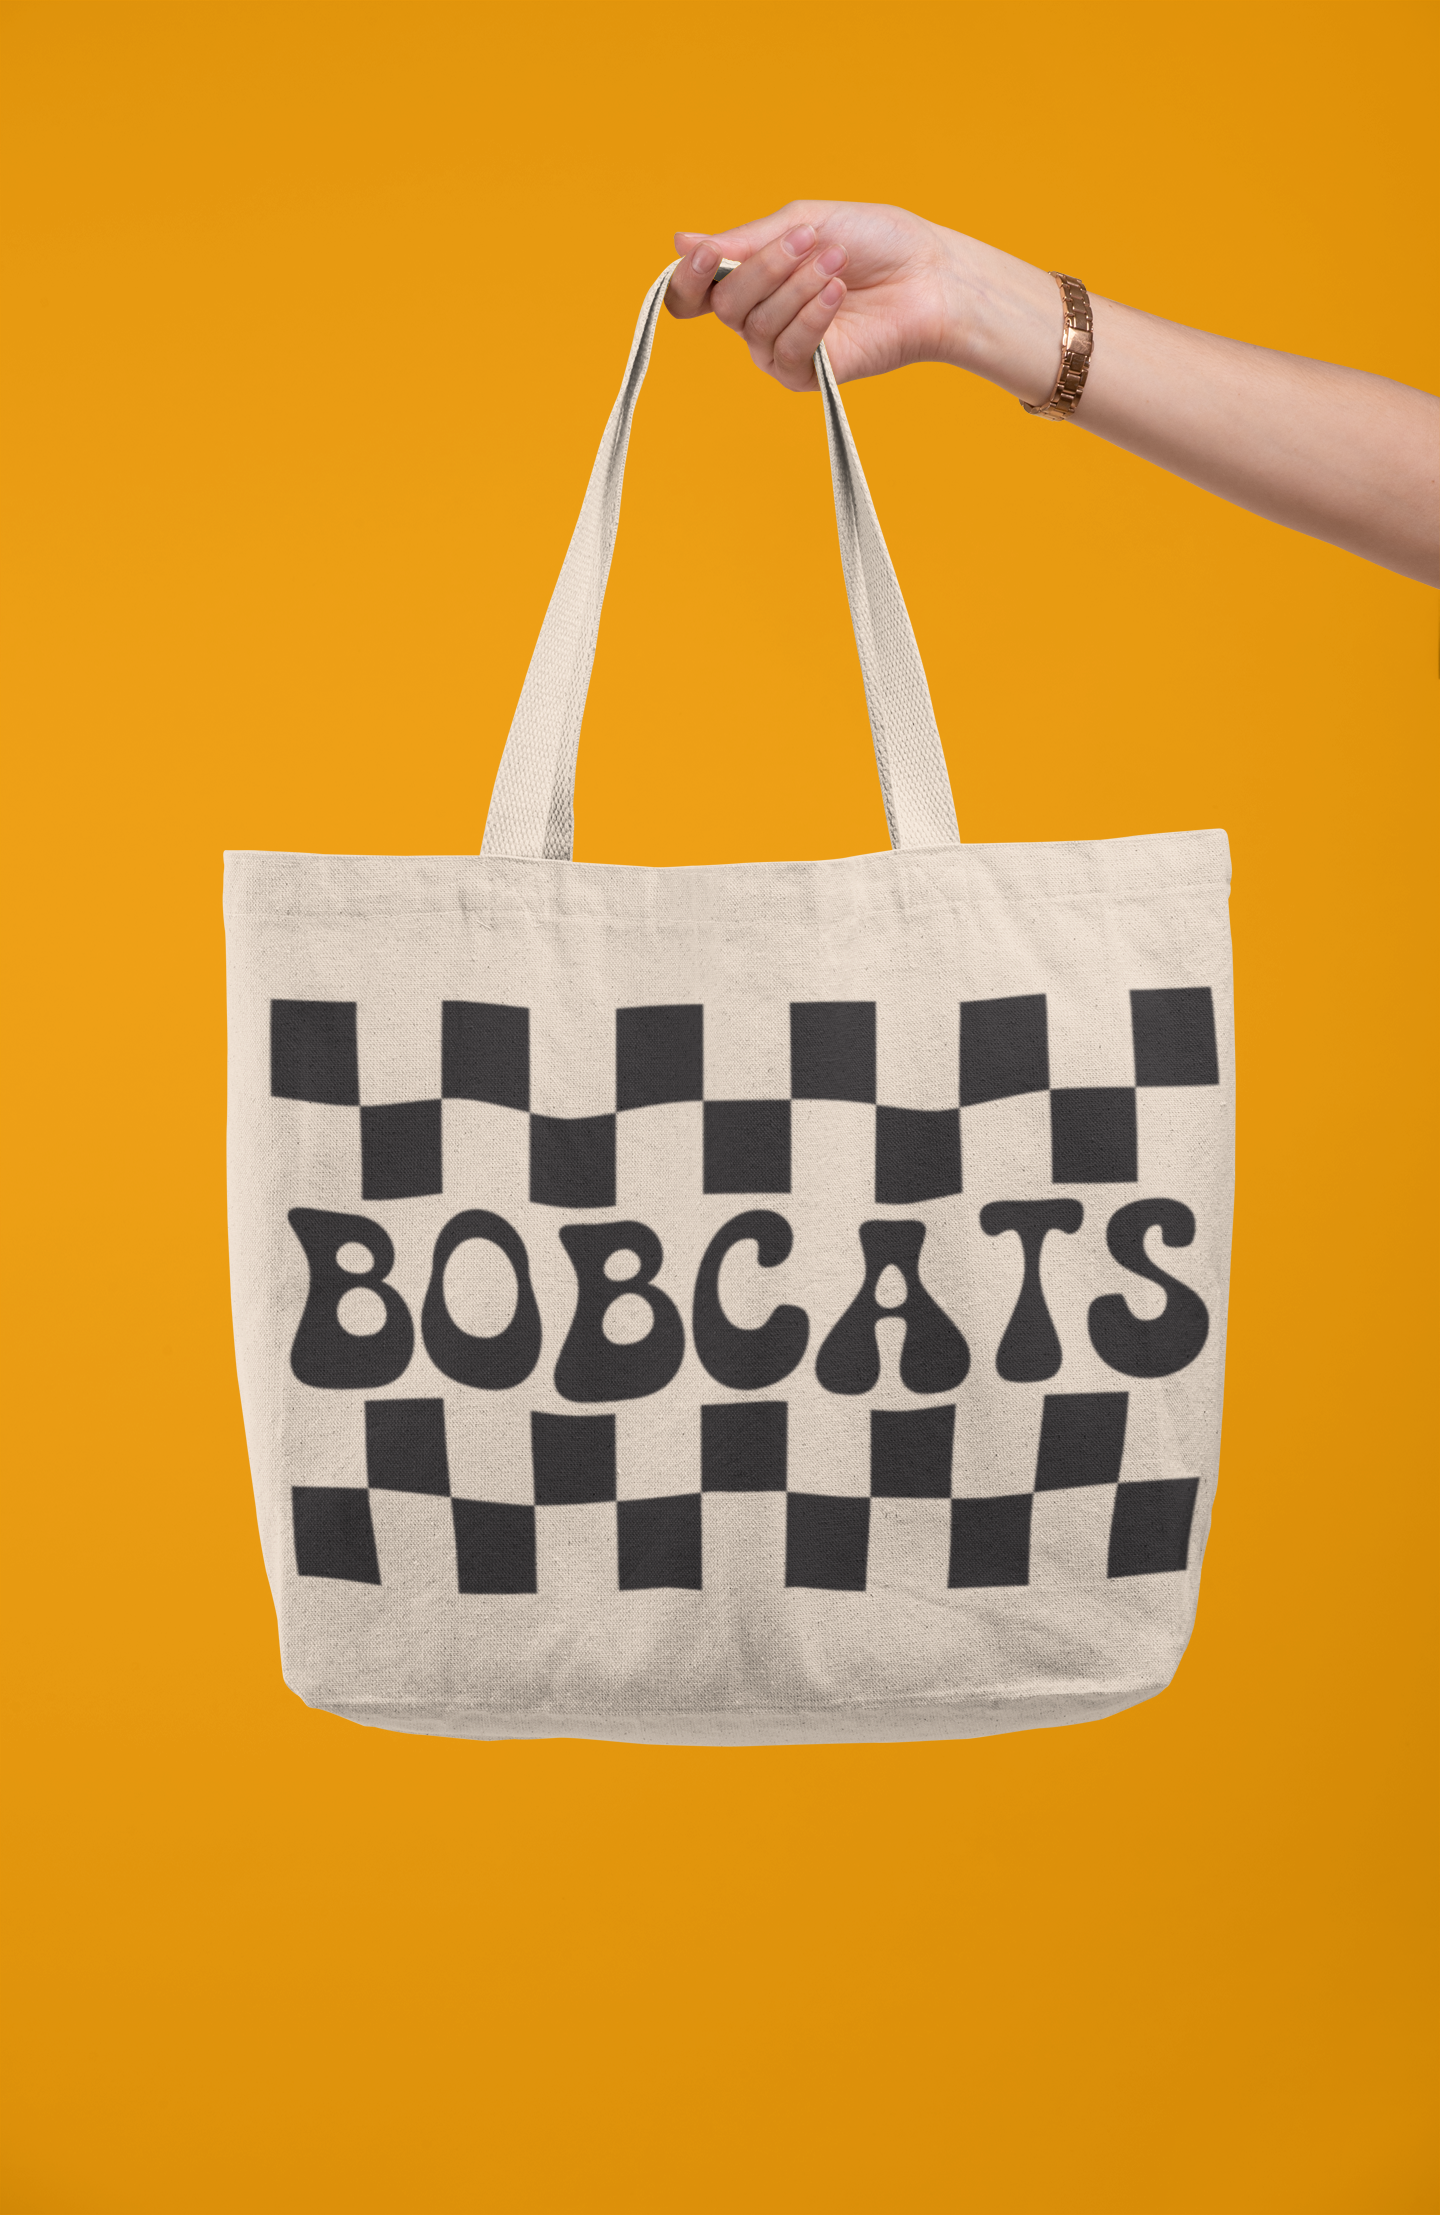 Bobcats Mascot Checker SVG Digital Download Design File